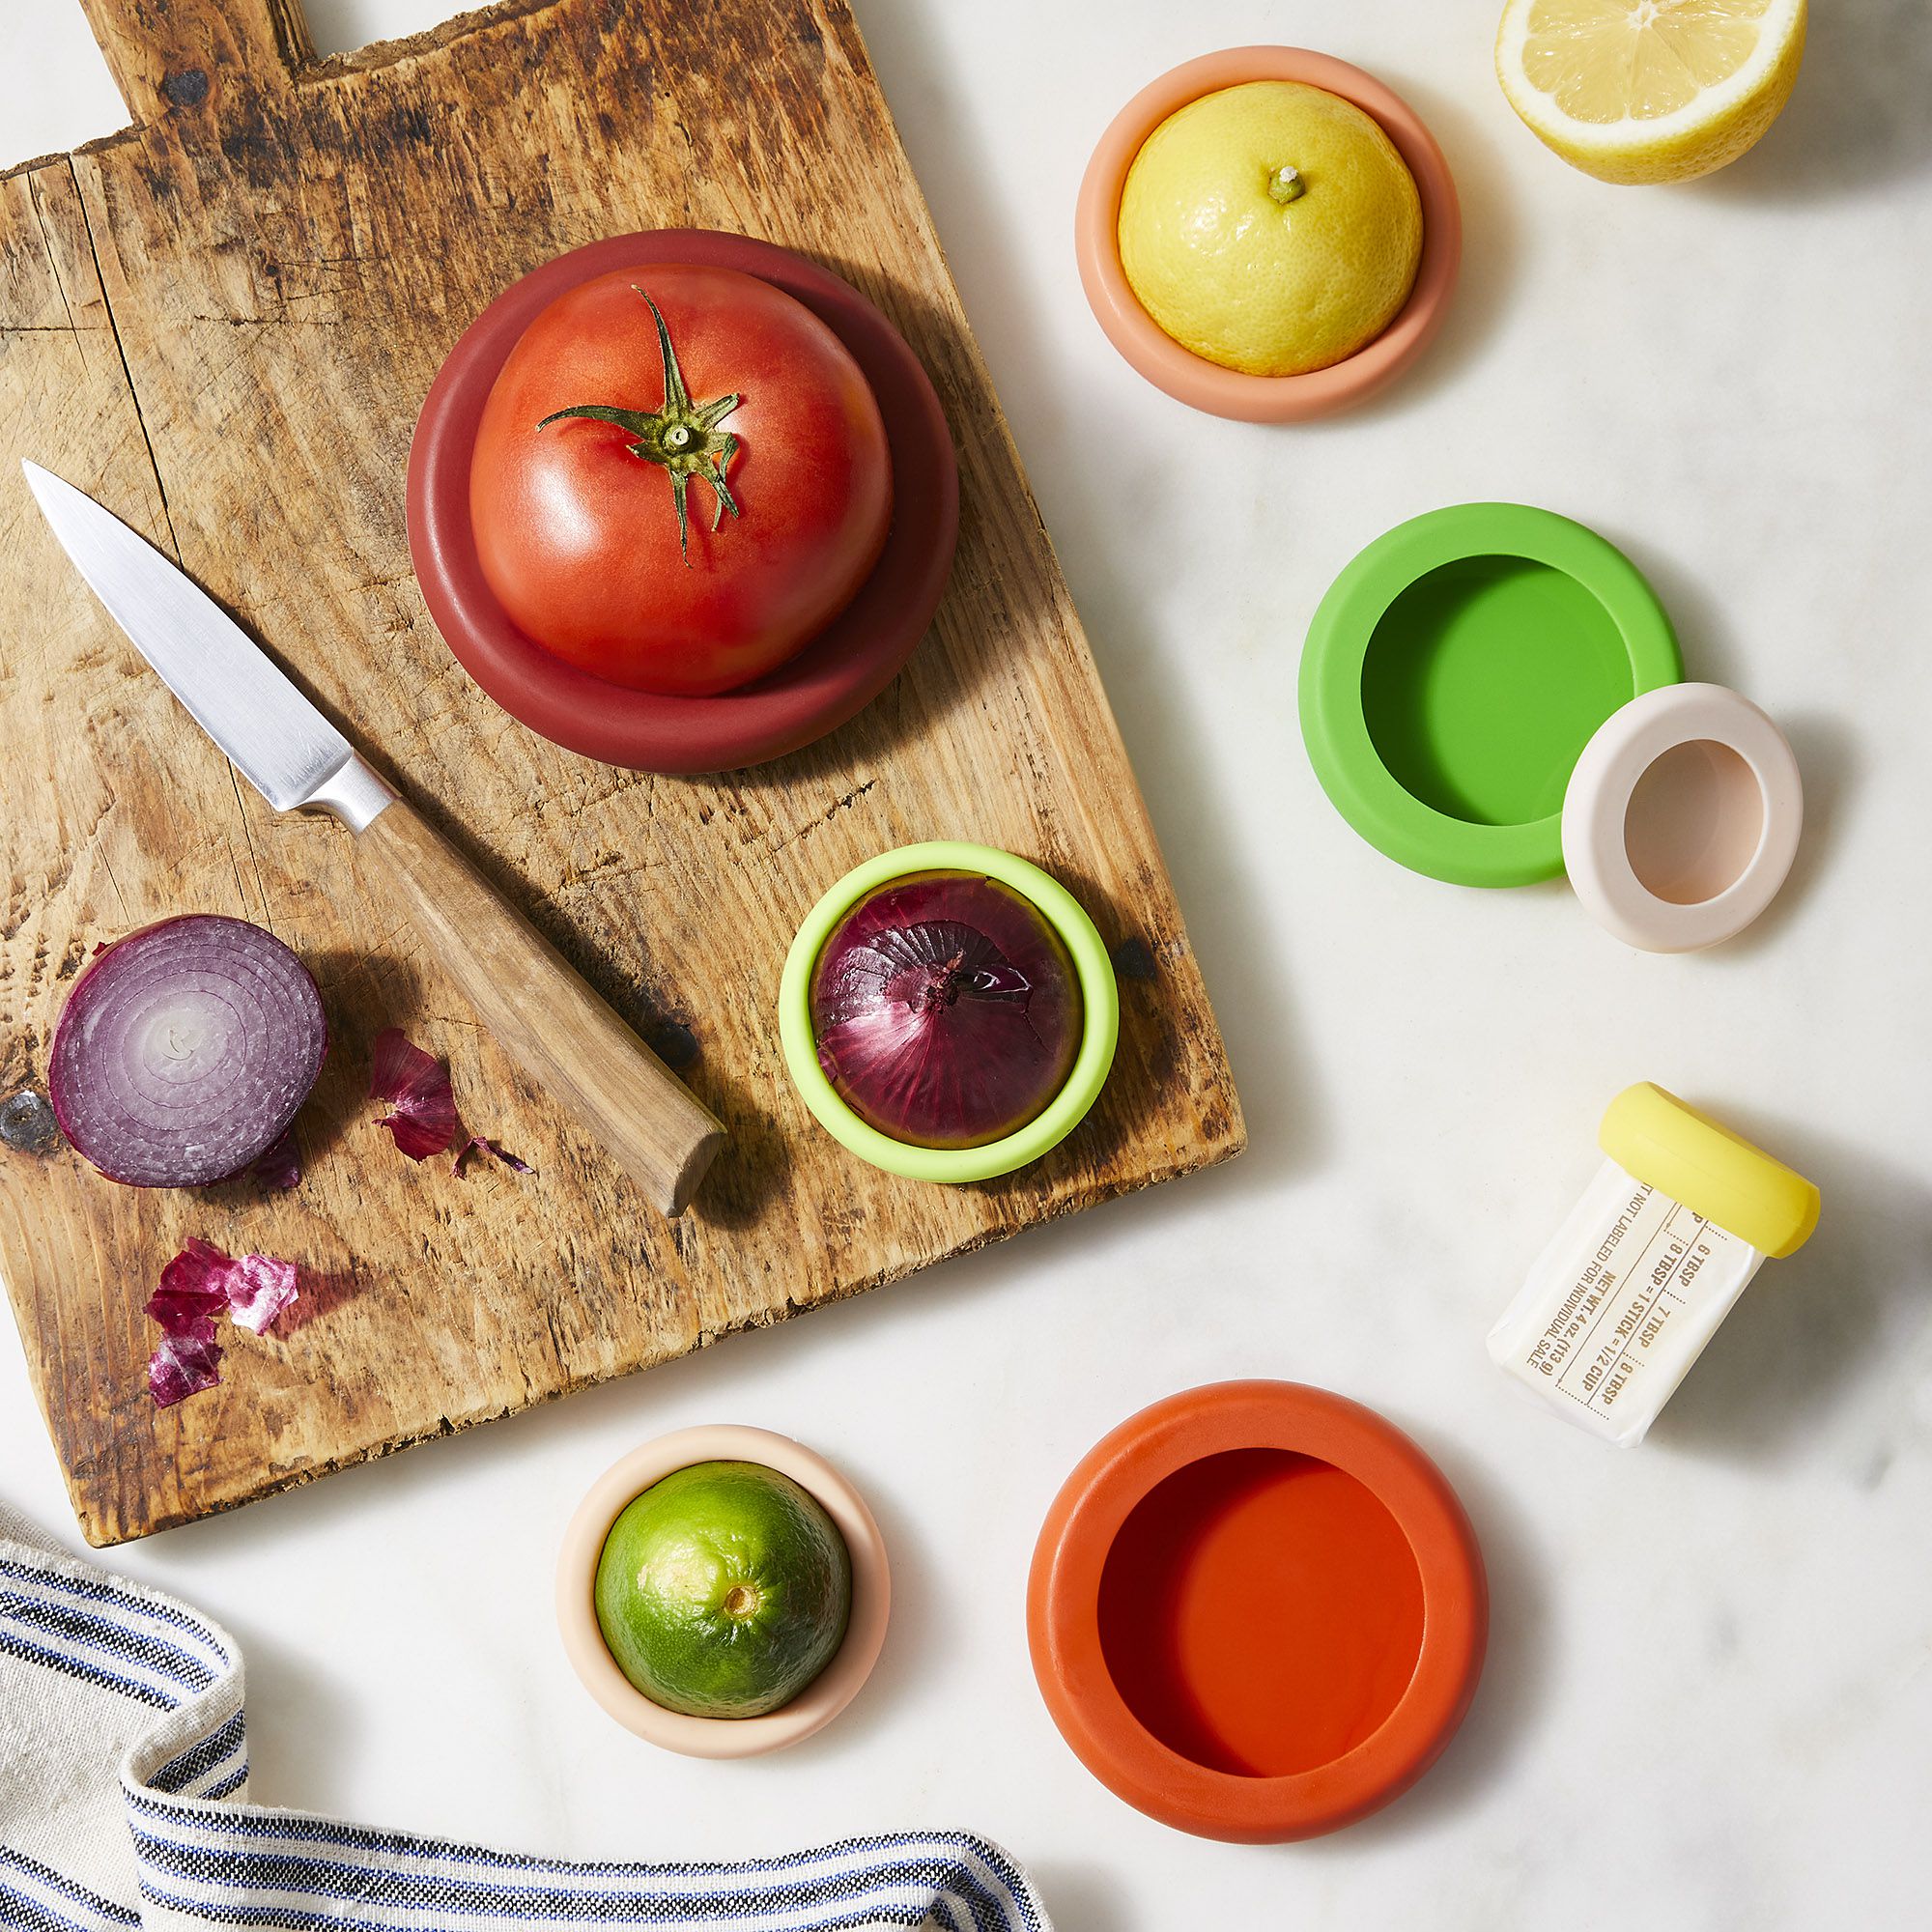 Food Huggers 5pc Reusable Silicone Food Savers | BPA Free & Dishwasher Safe  | Fruit & Vegetable Produce Storage for Onion, Tomato, Lemon, Banana, Cans